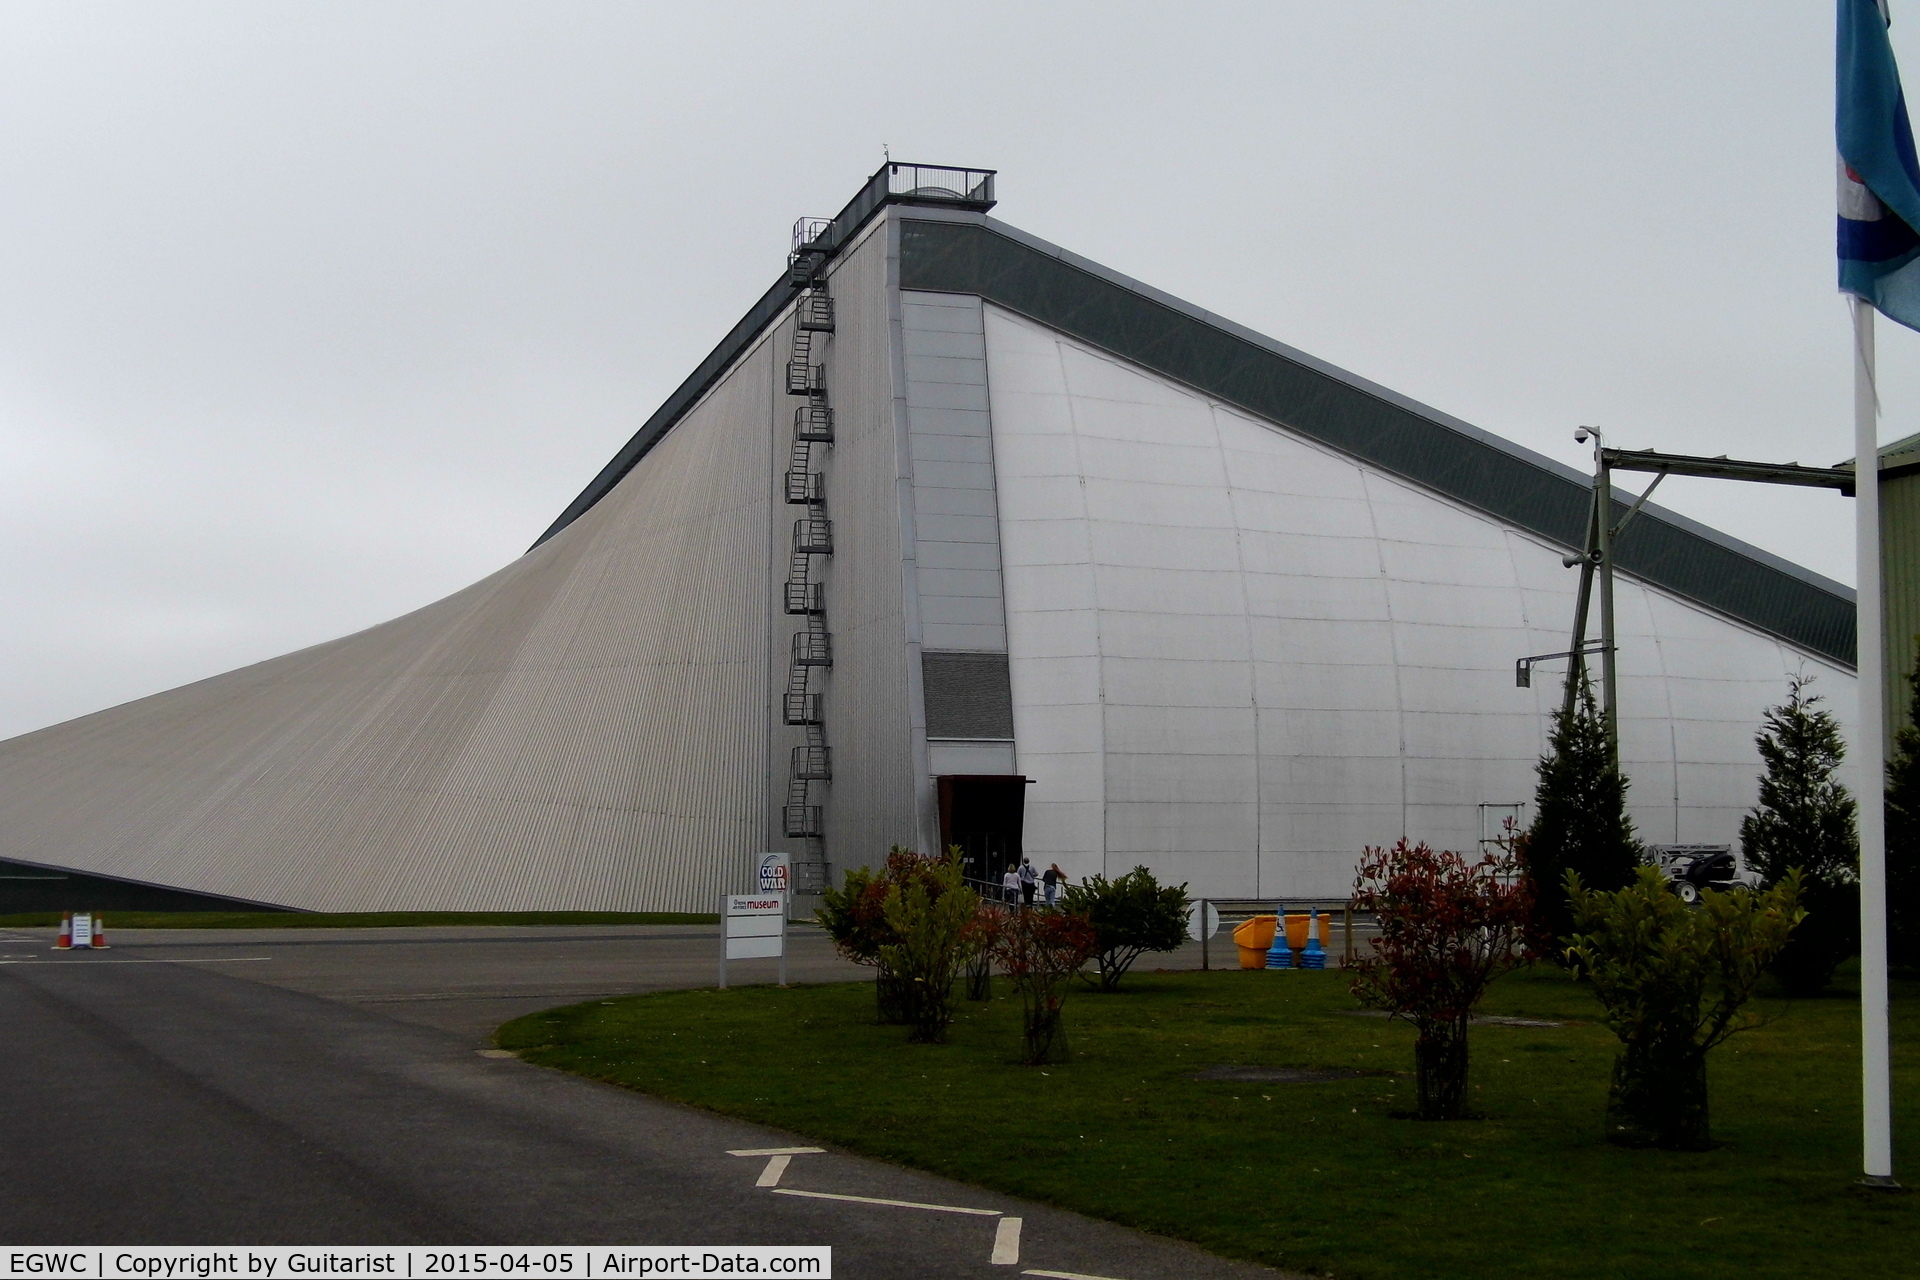 RAF Cosford Airport, Albrighton, England United Kingdom (EGWC) - Interesting shaped exhibitions hangar